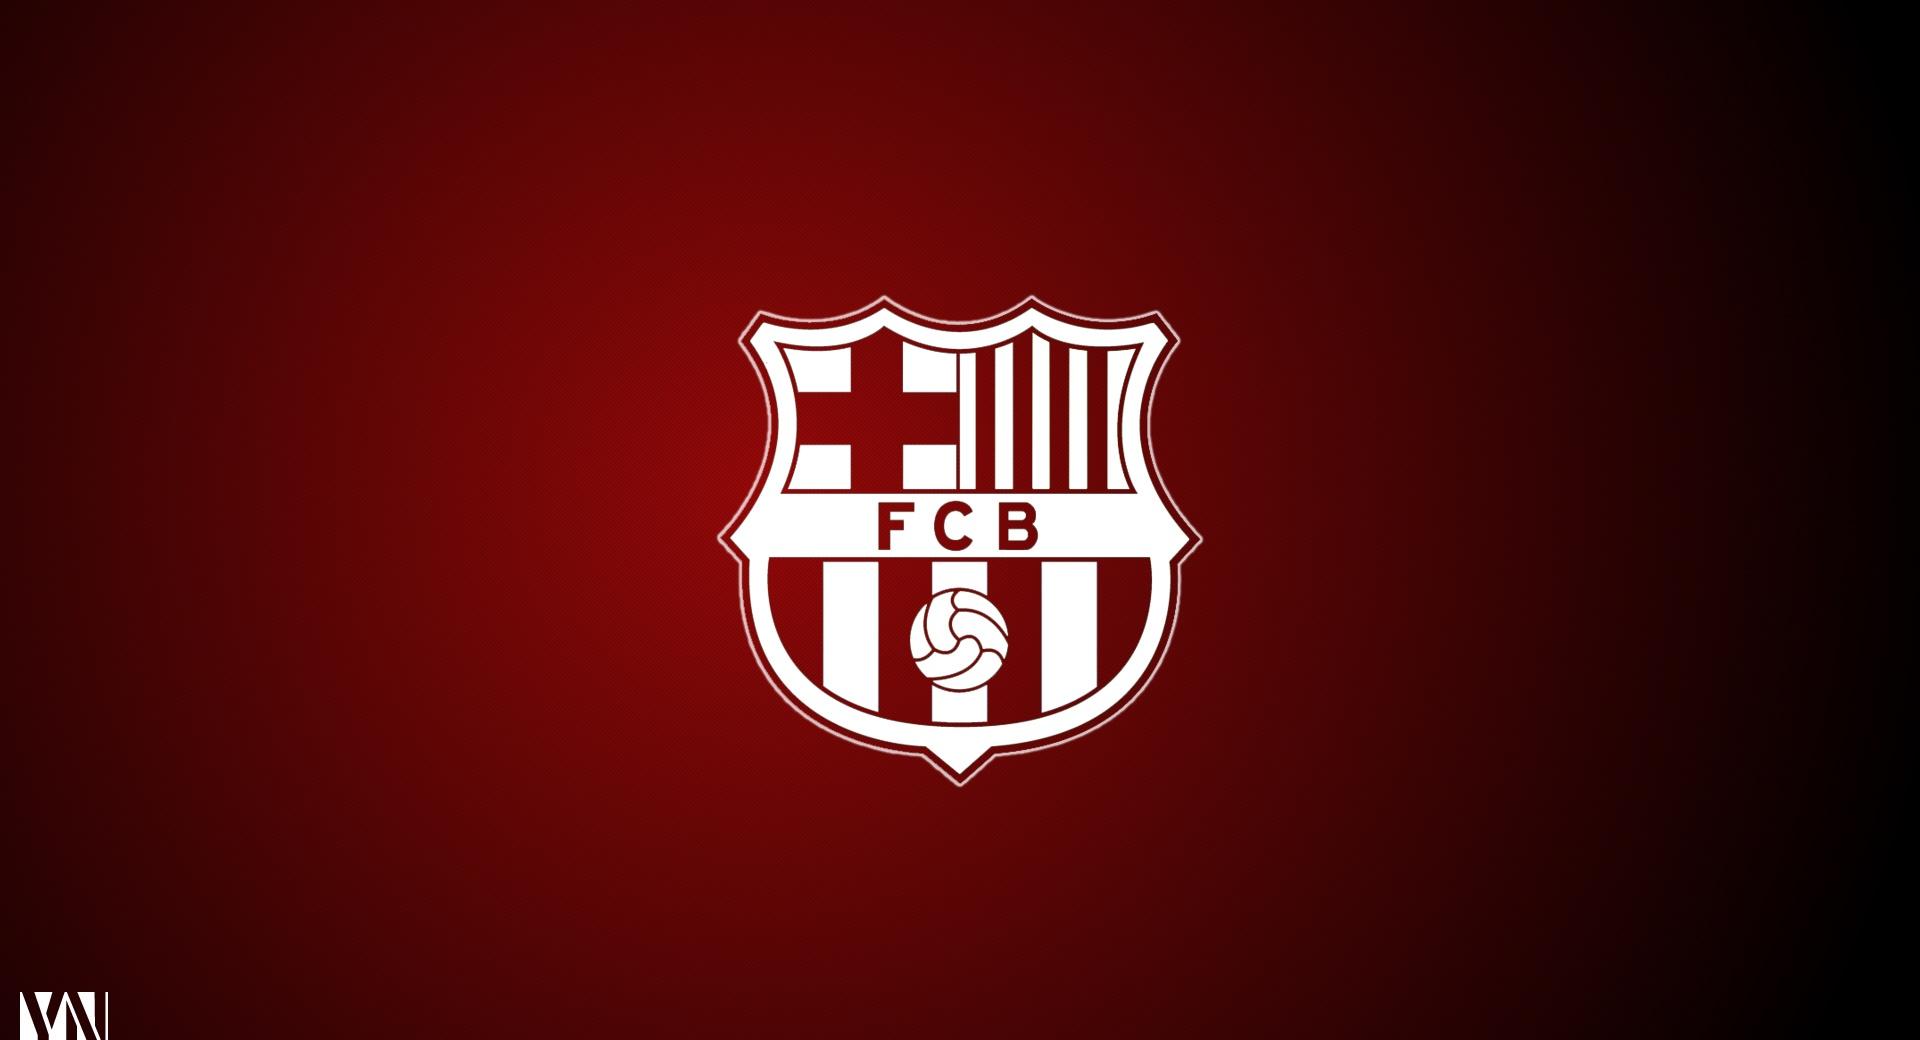 FC Barcelona by Yakub Nihat wallpapers HD quality